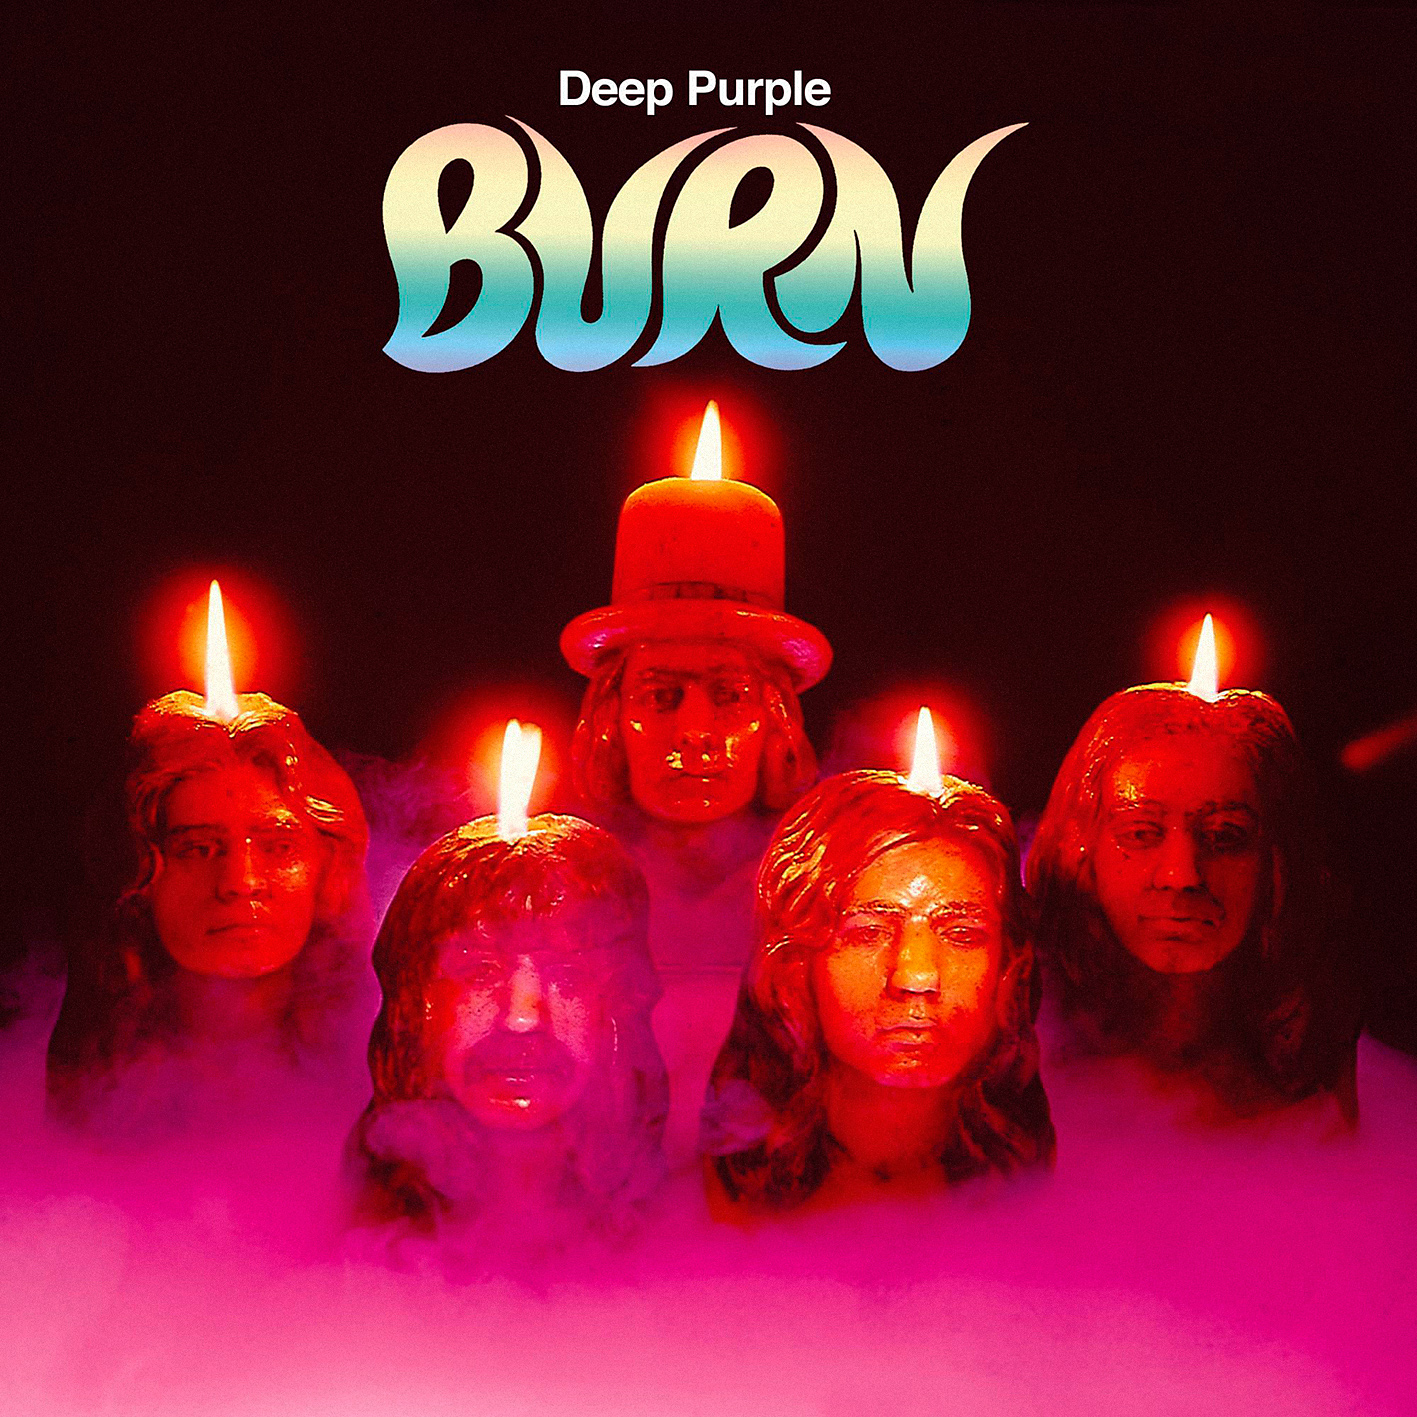 Deep Purple - Burn (1974/2016) [HDTracks FLAC 24bit/96kHz]